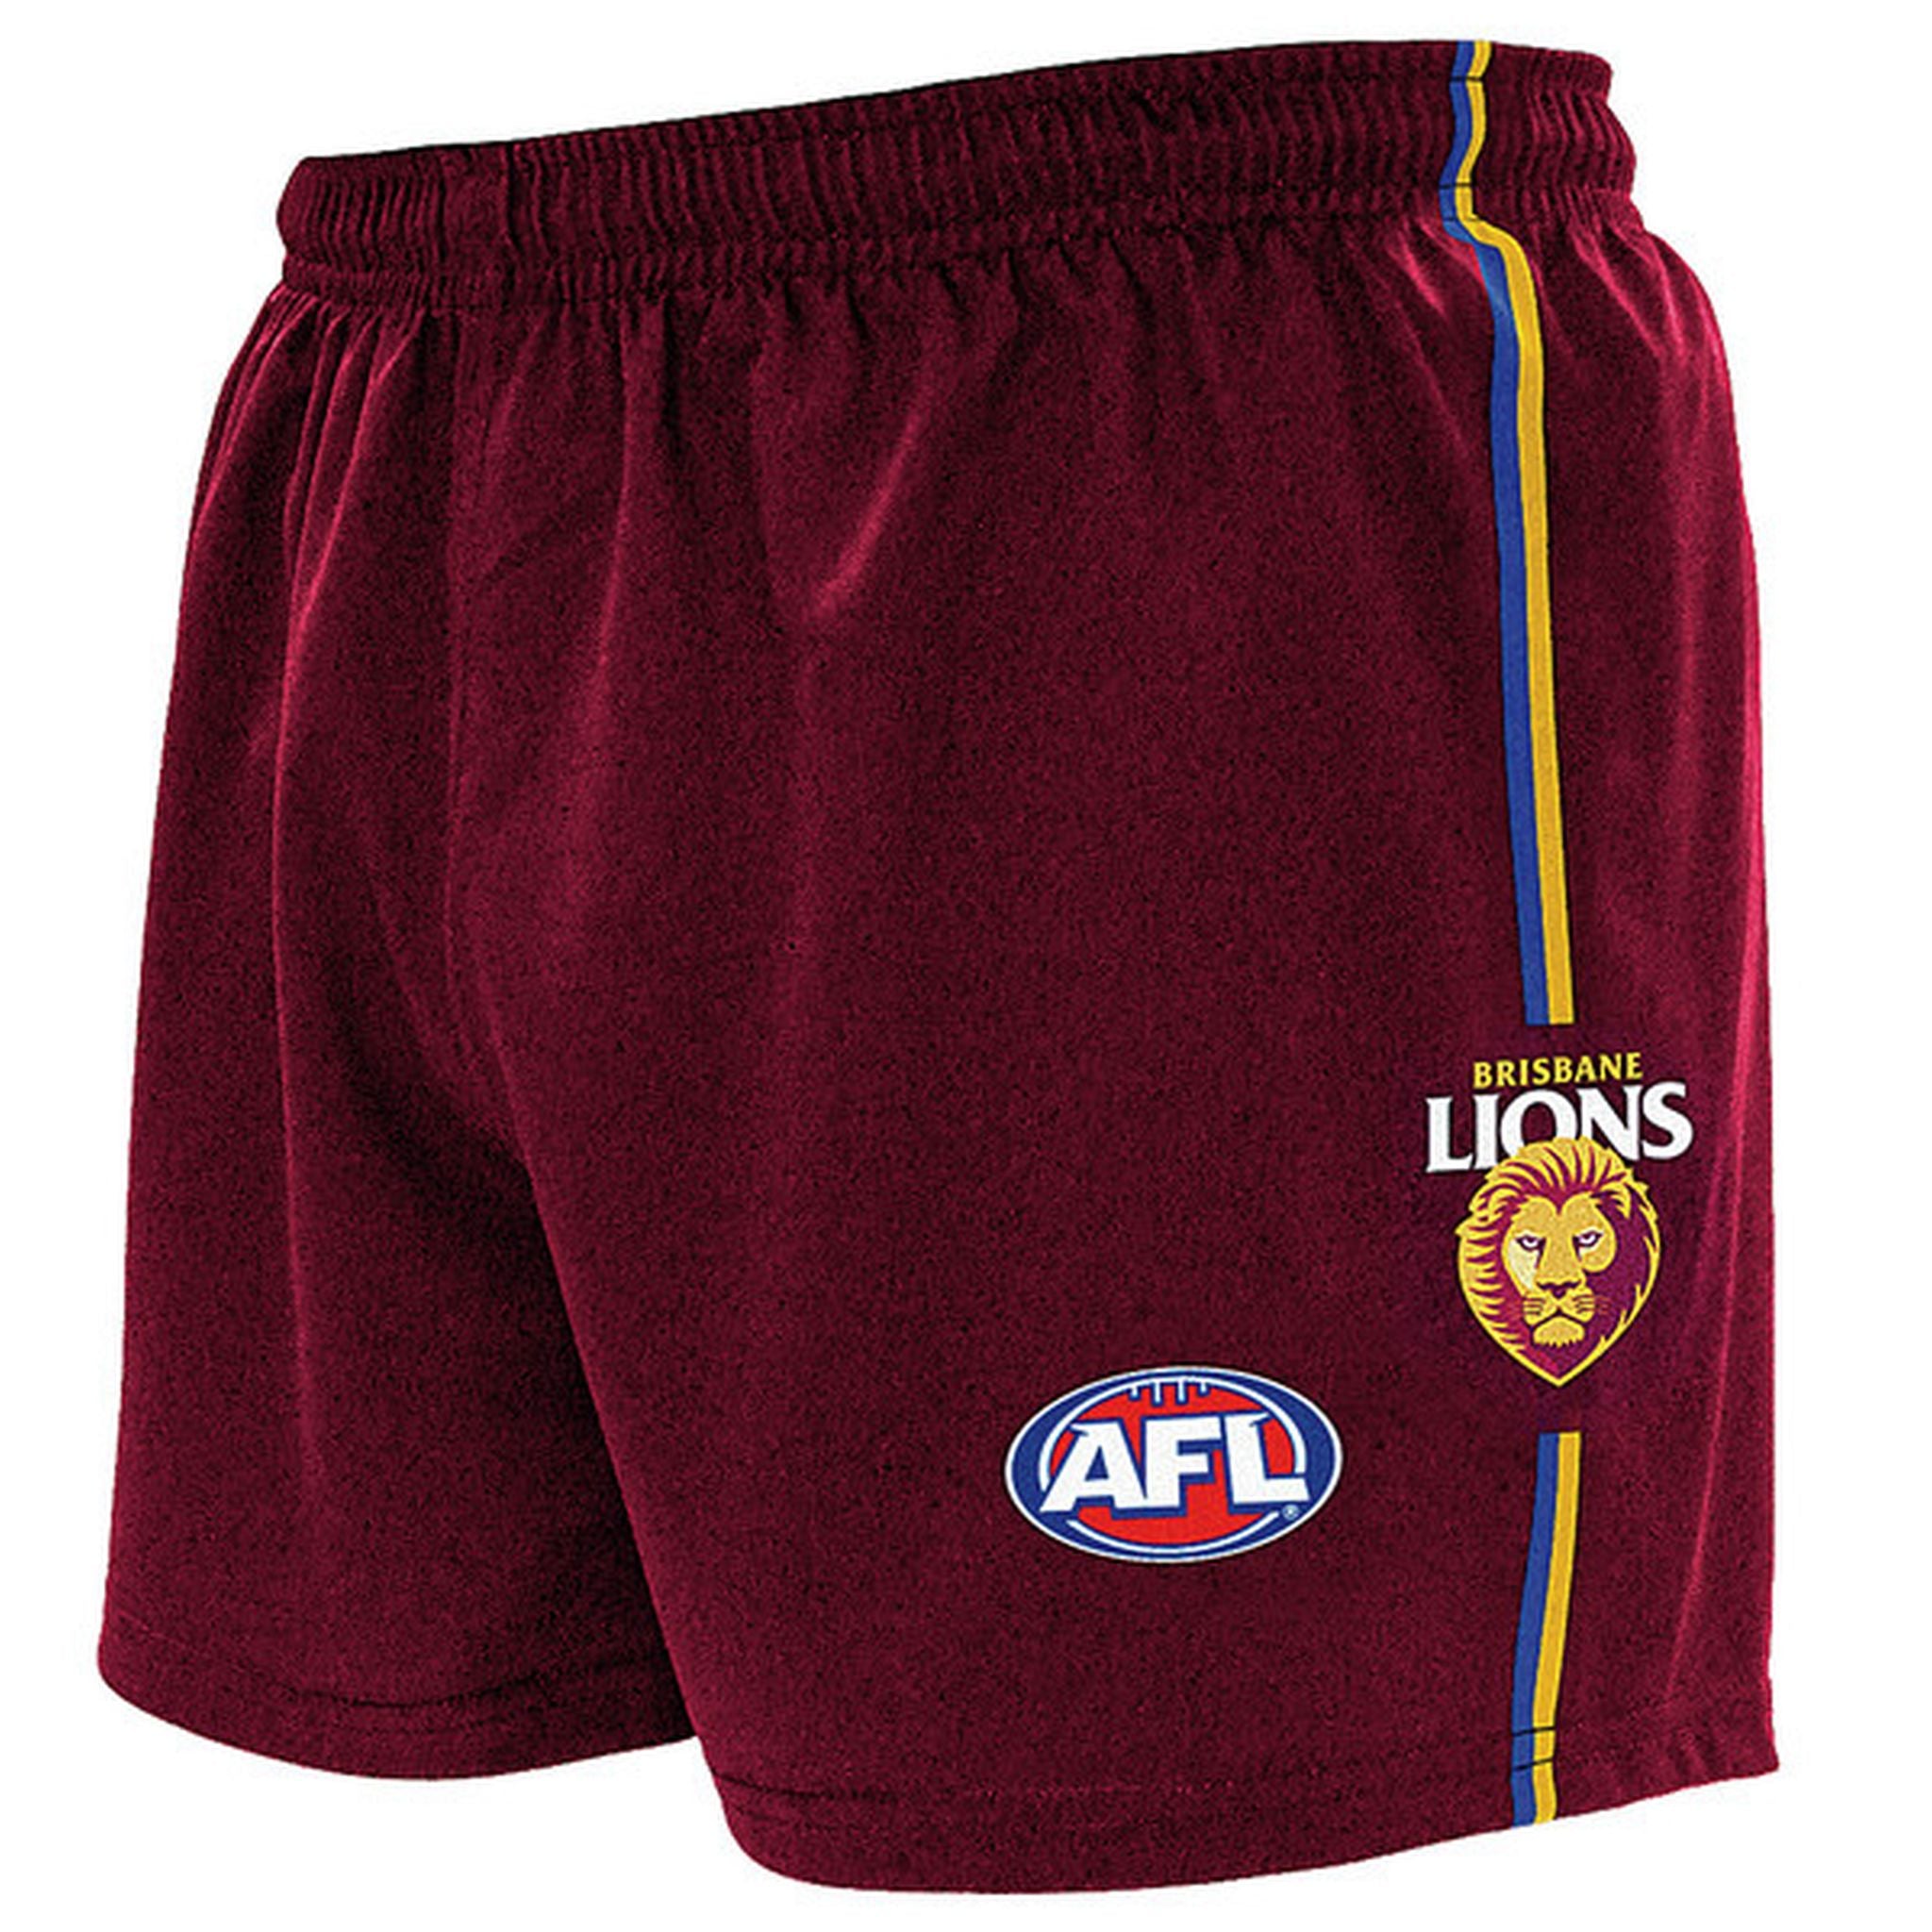 Burley Brisbane Lions AFL Replica Kids Shorts